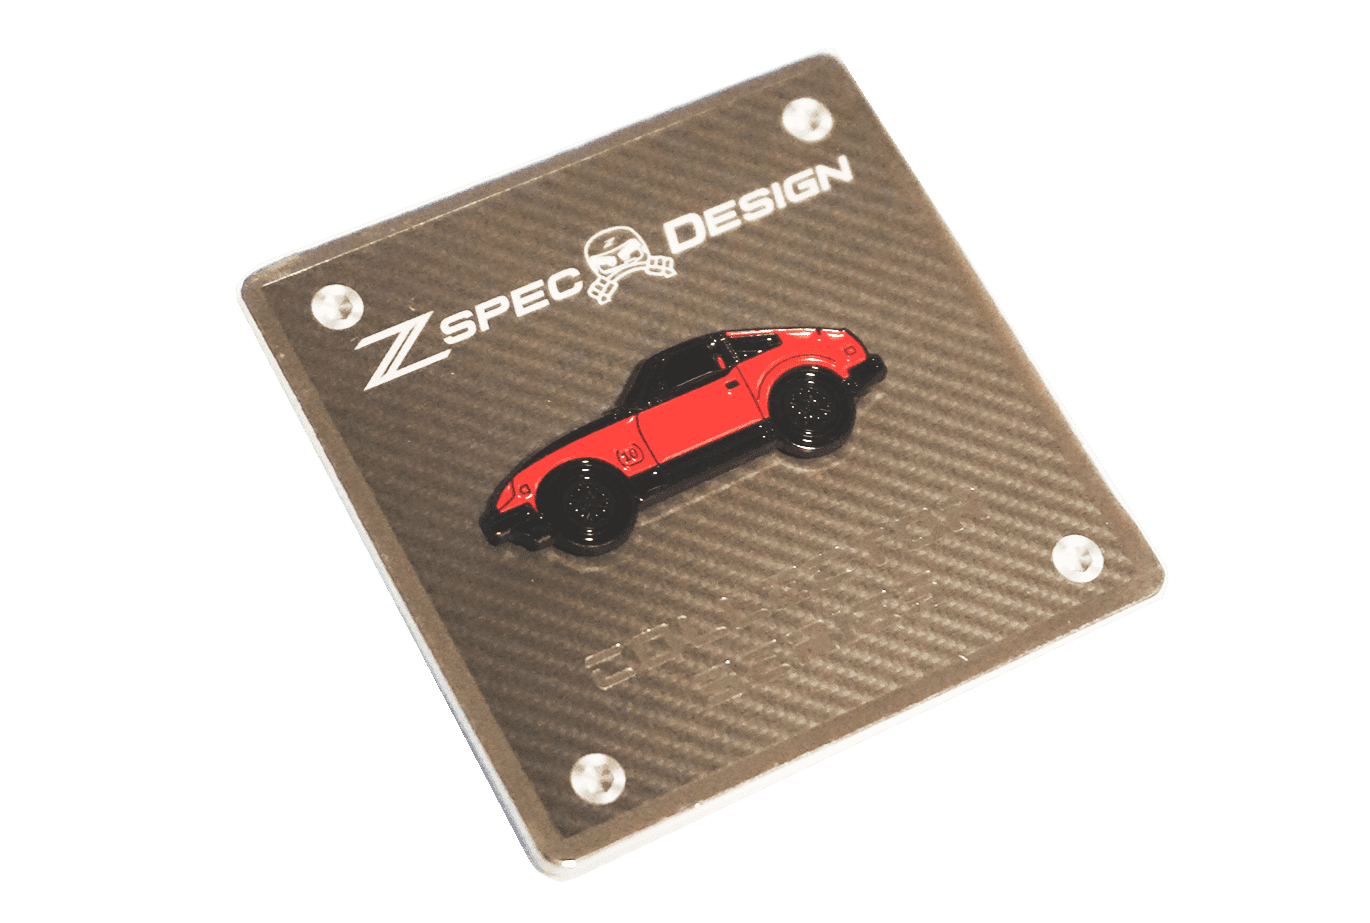 ZSPEC Datsun 280zx S130 Anniversary Edition Lapel / Hat Pin Collectibles ZSPEC Design LLC.